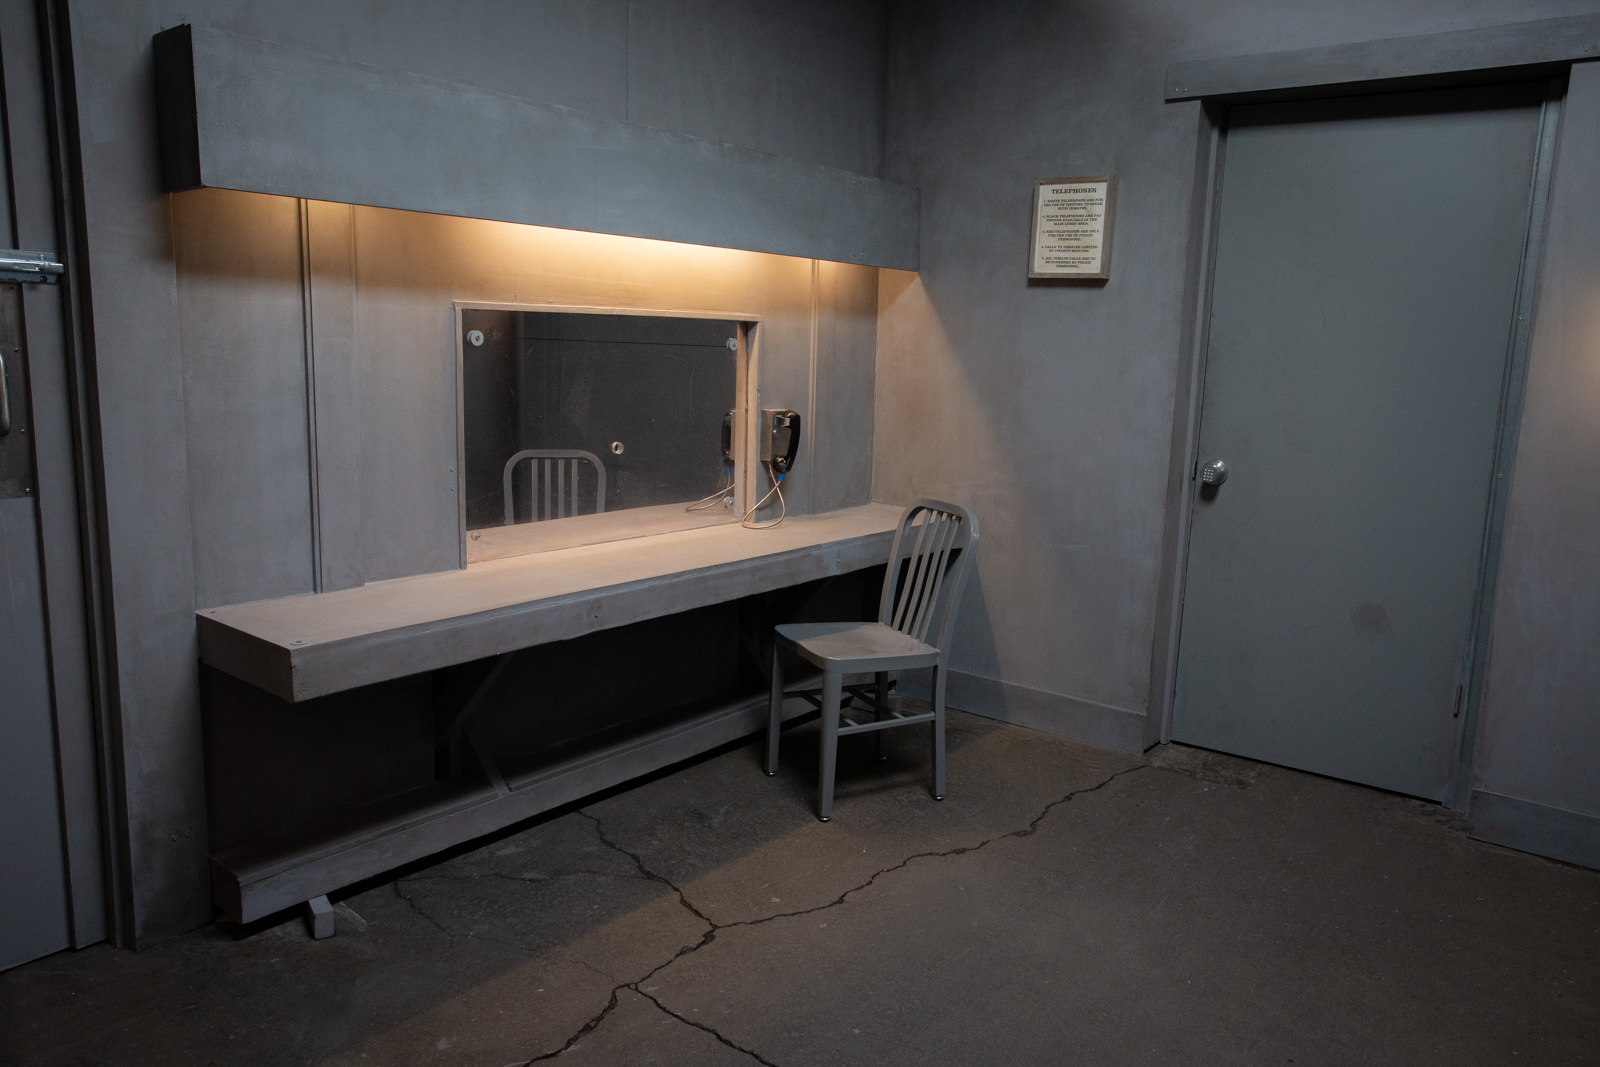 Correctional facility visitation film location